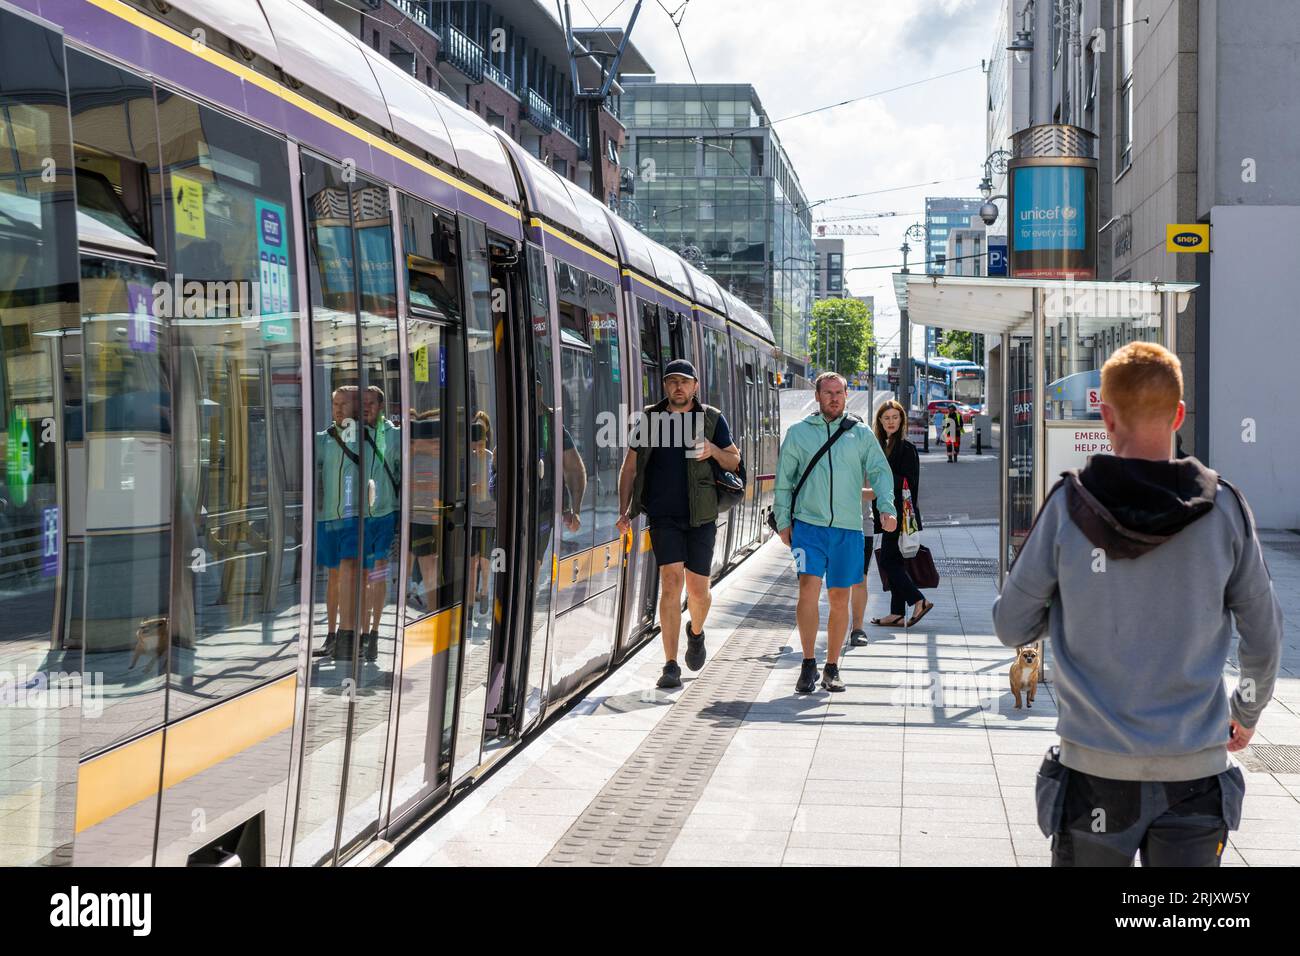 People on a Luas tram station platform boarding a tram in Dublin, Ireland. Stock Photo